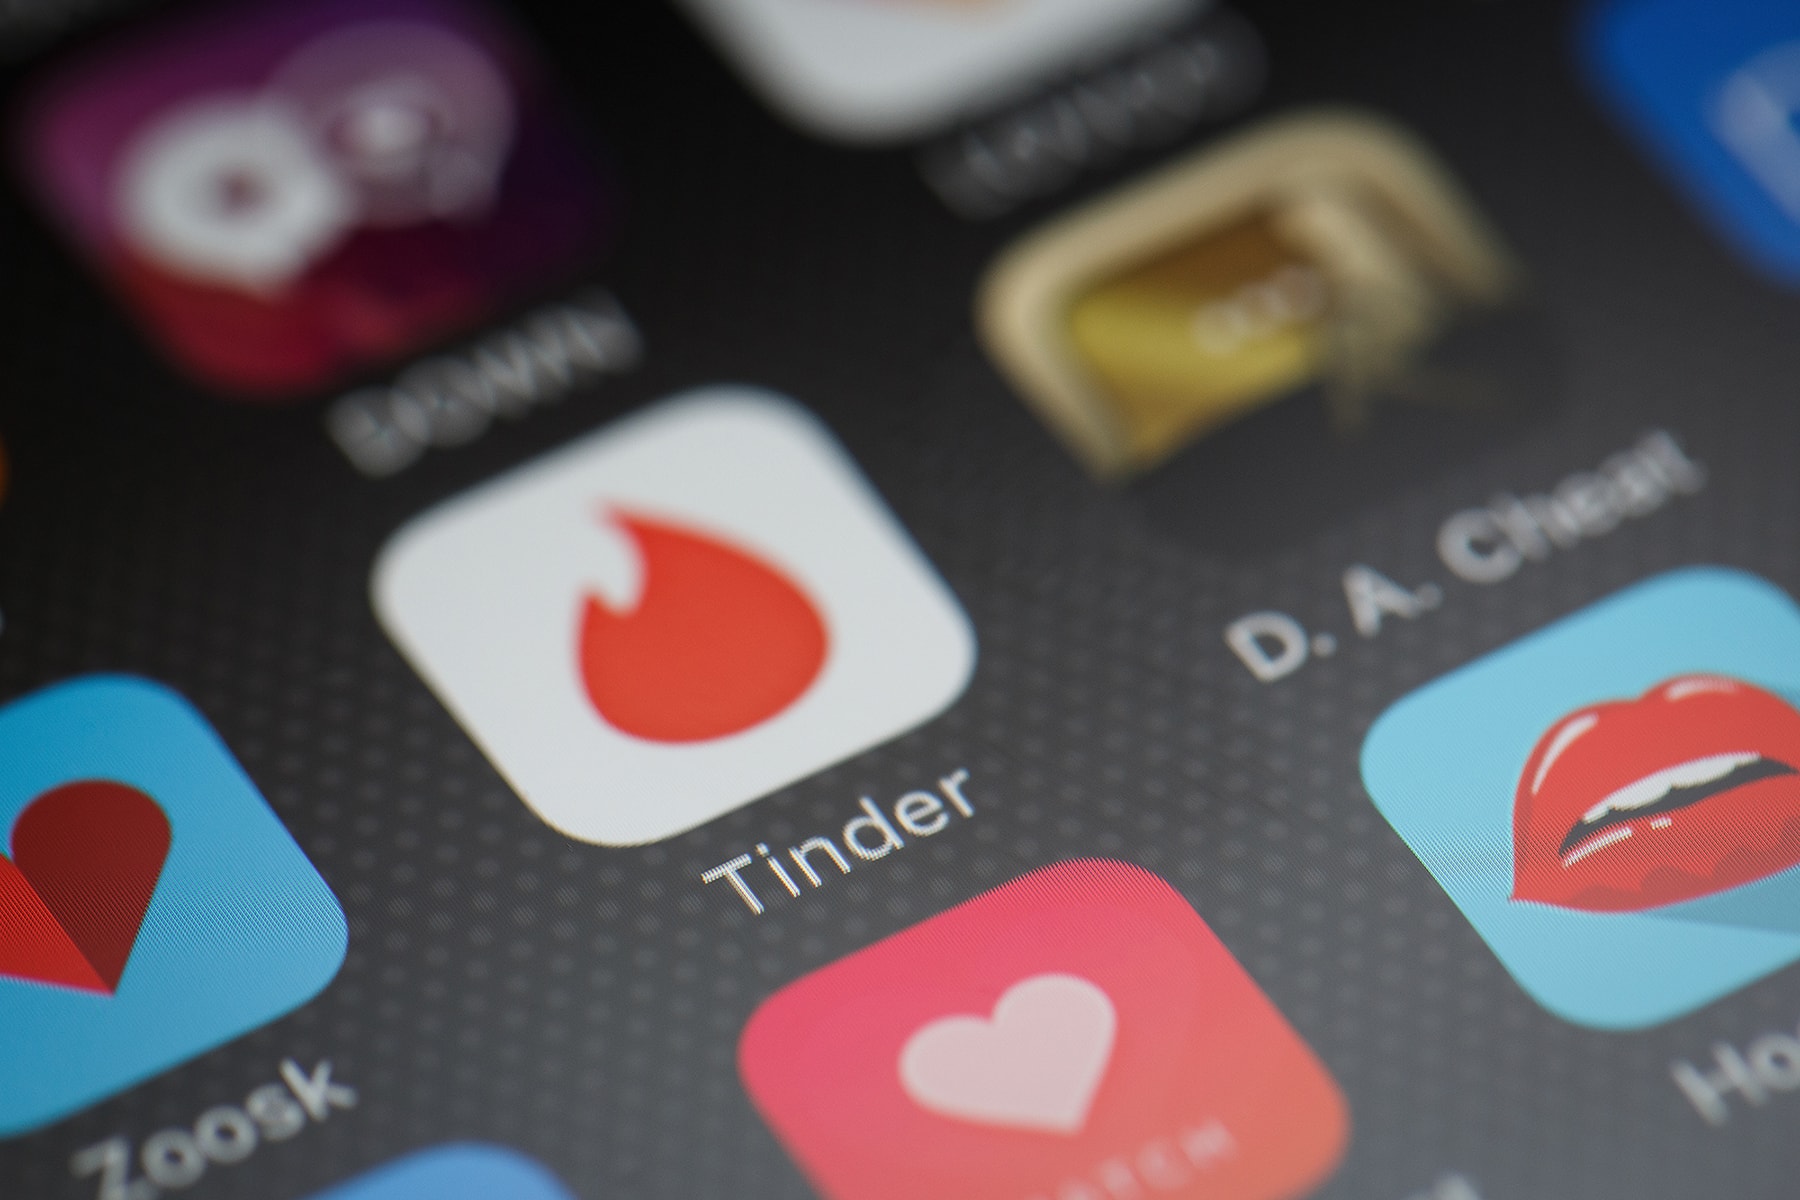 tinder match group bumble dating app lawsuit suing